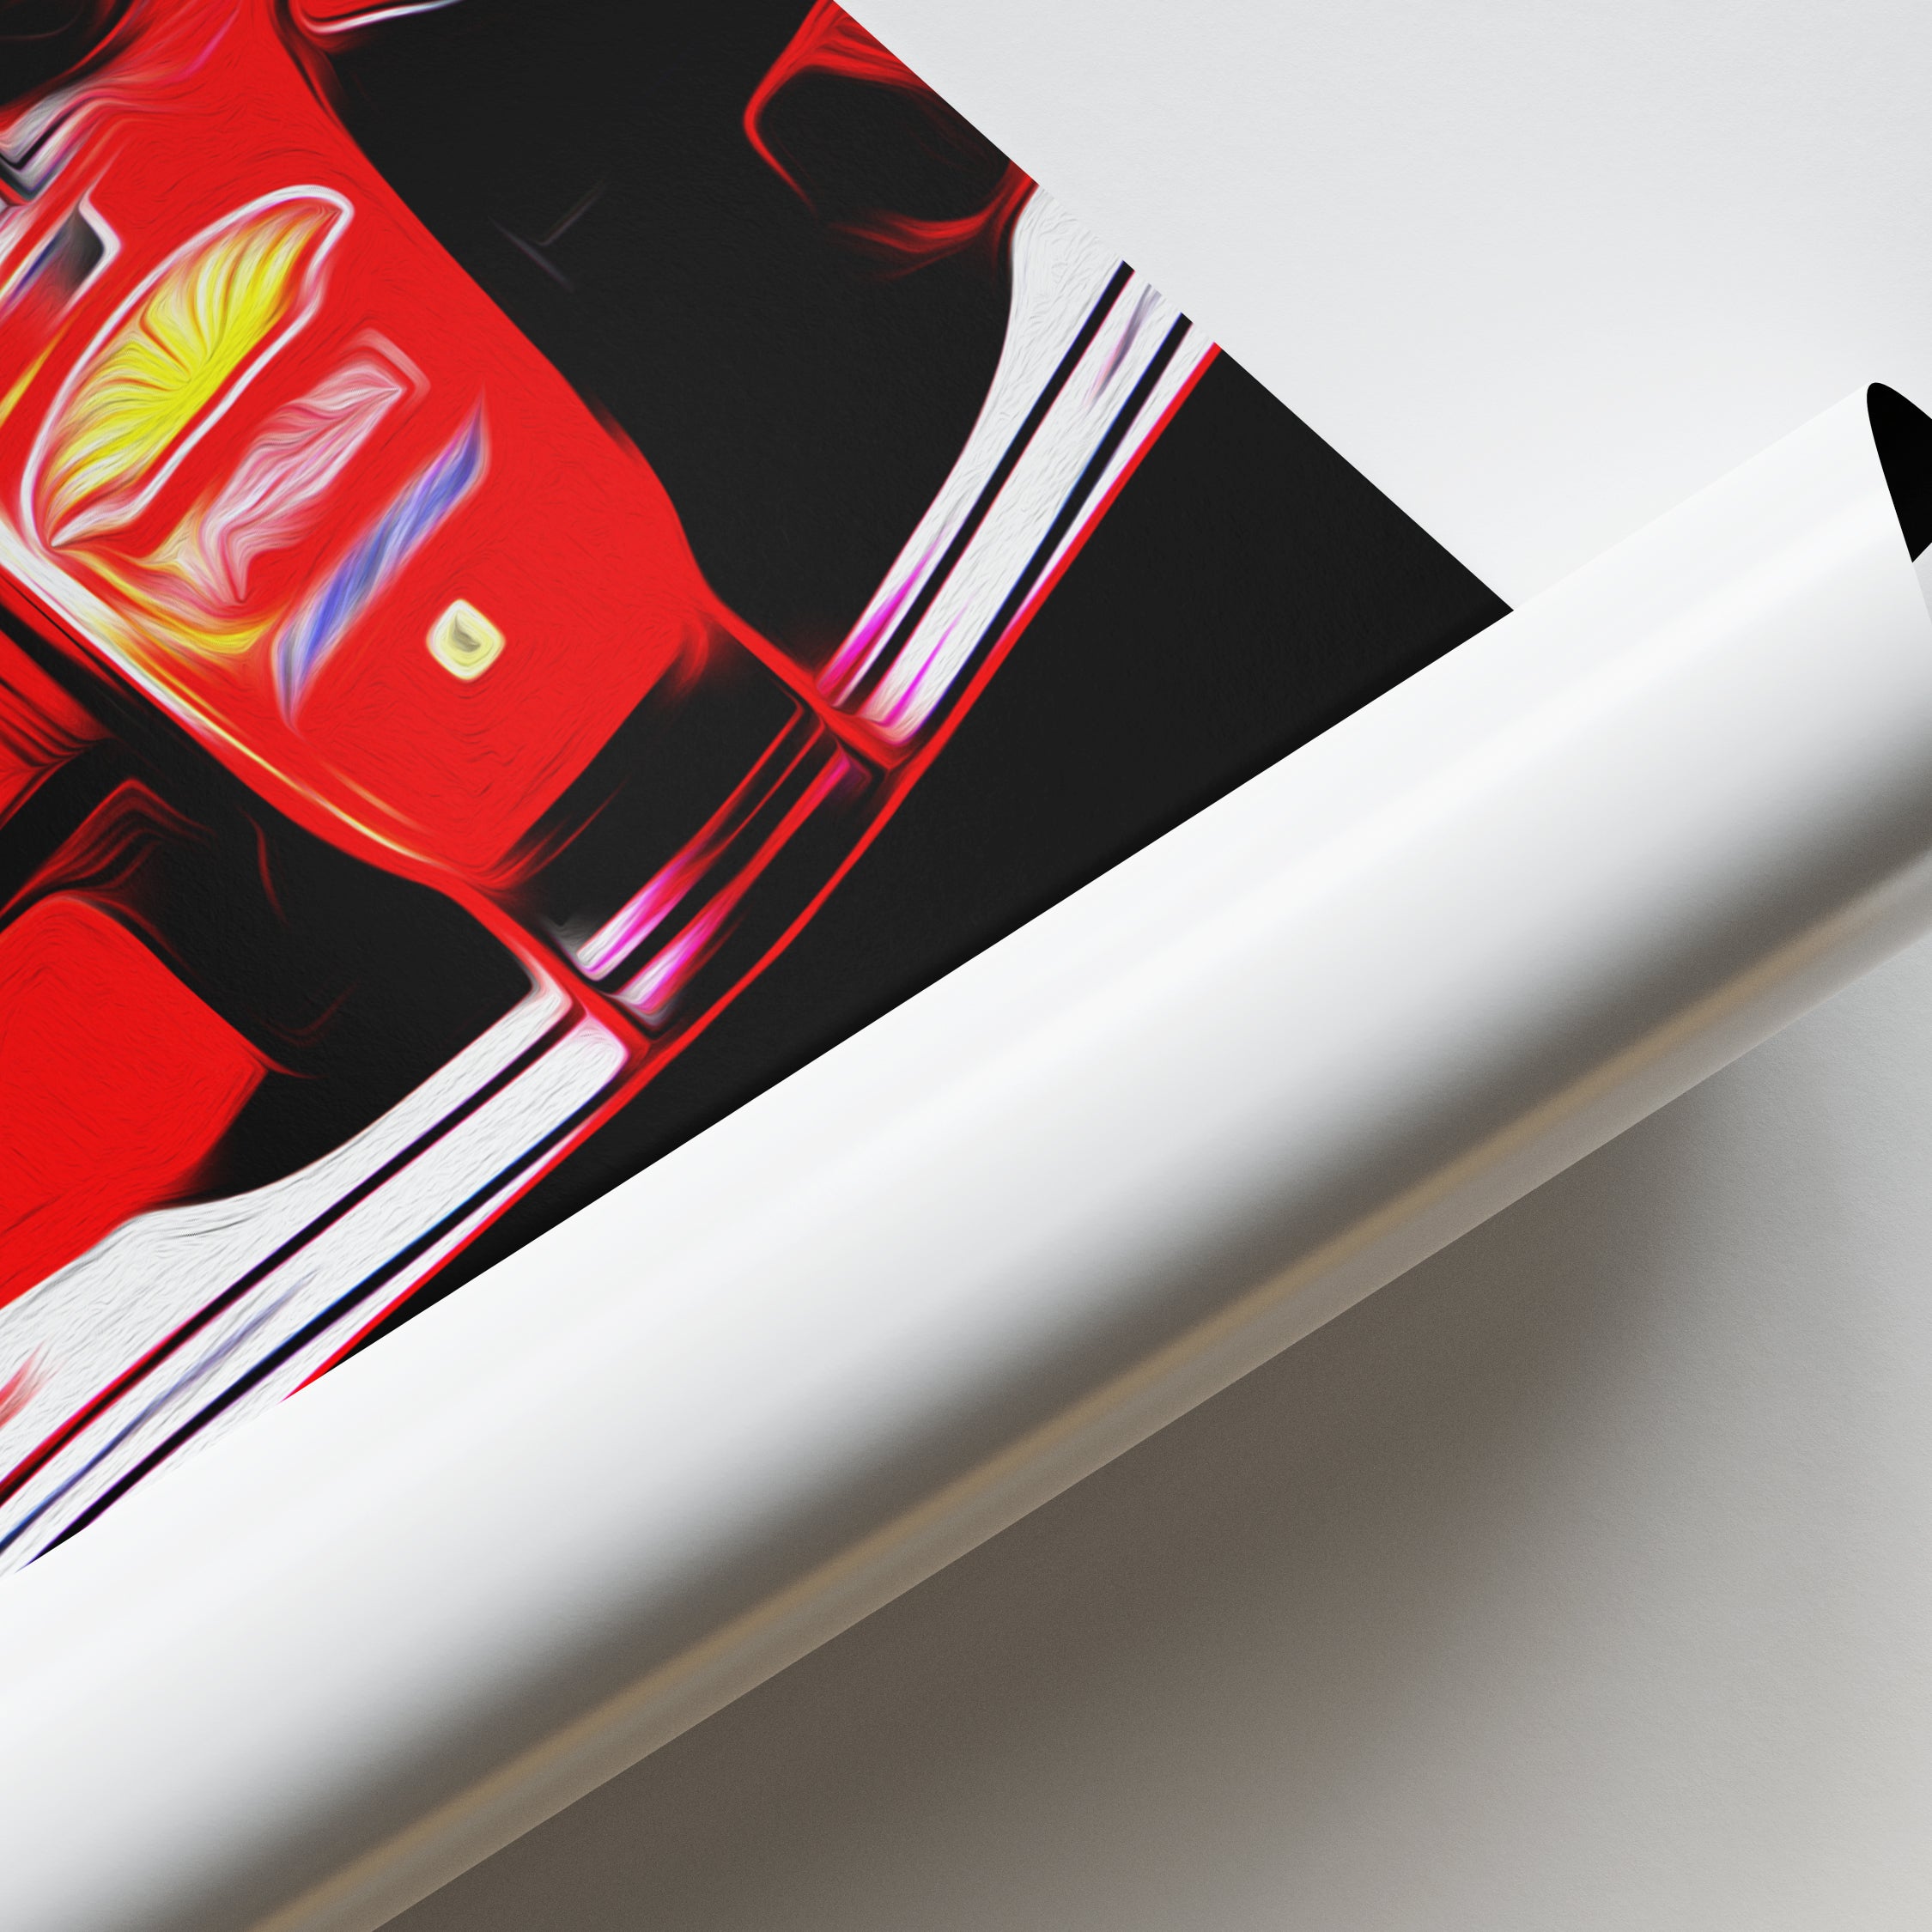 Ferrari F2001, Michael Schumacher - Formula 1 Poster Print